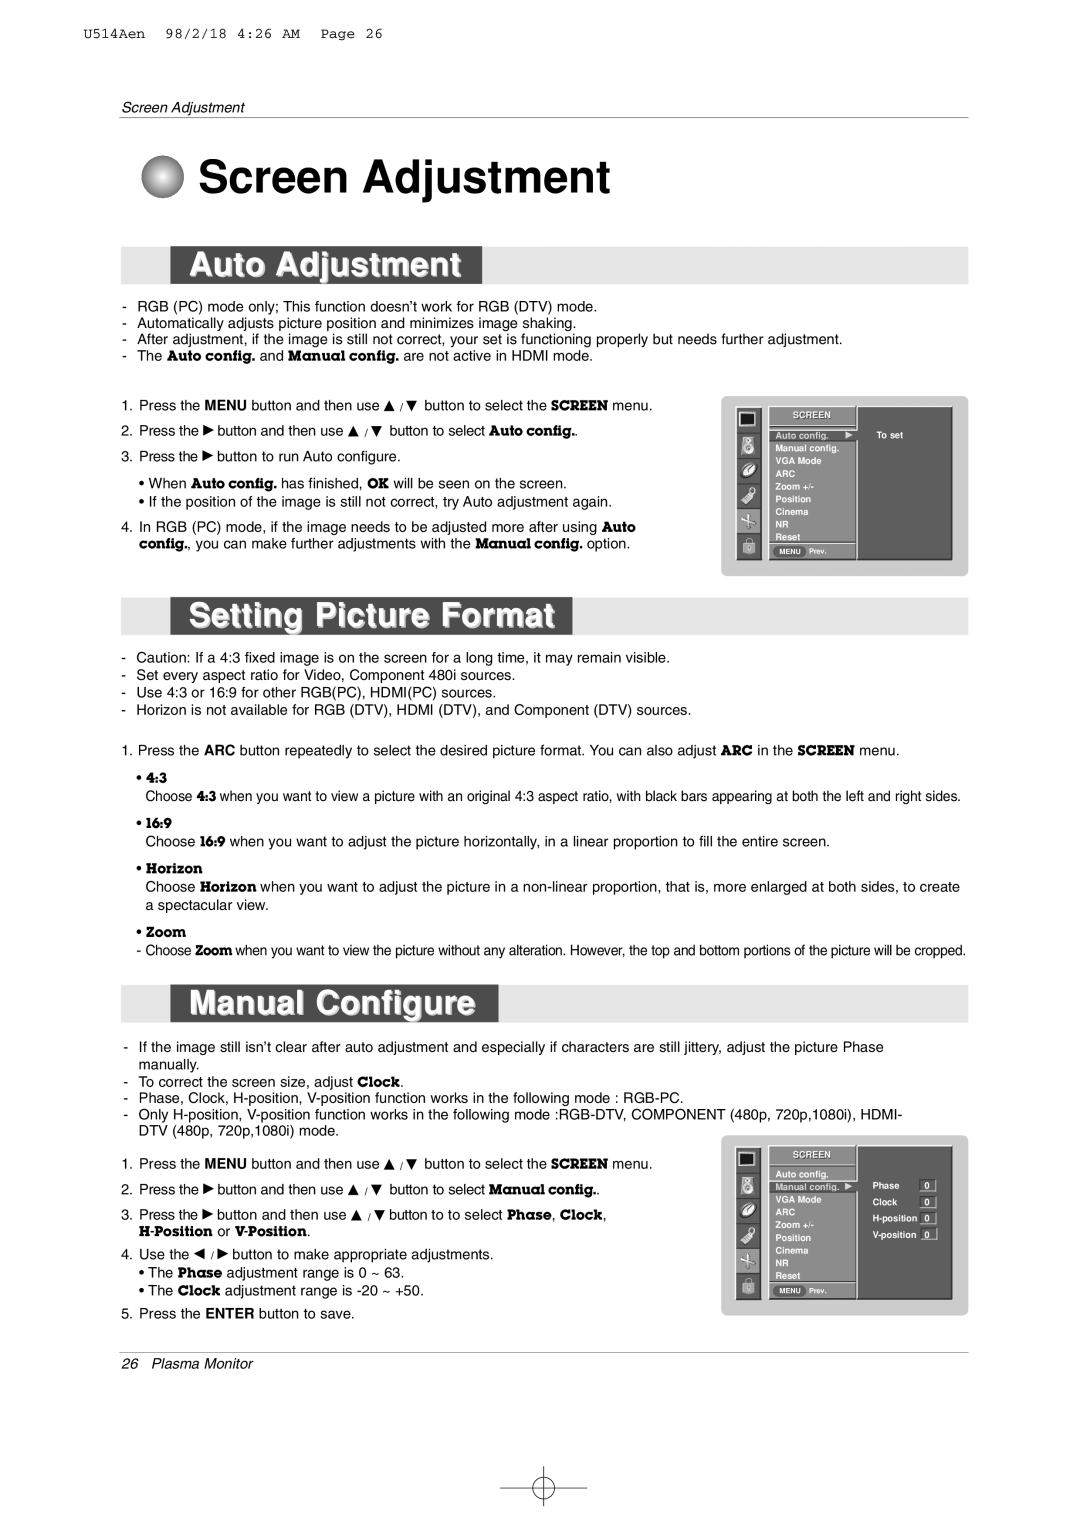 LG Electronics 42PM1M owner manual Screen Adjustment, Auto Adjustment, Setting Picture Format, Manual Configure 